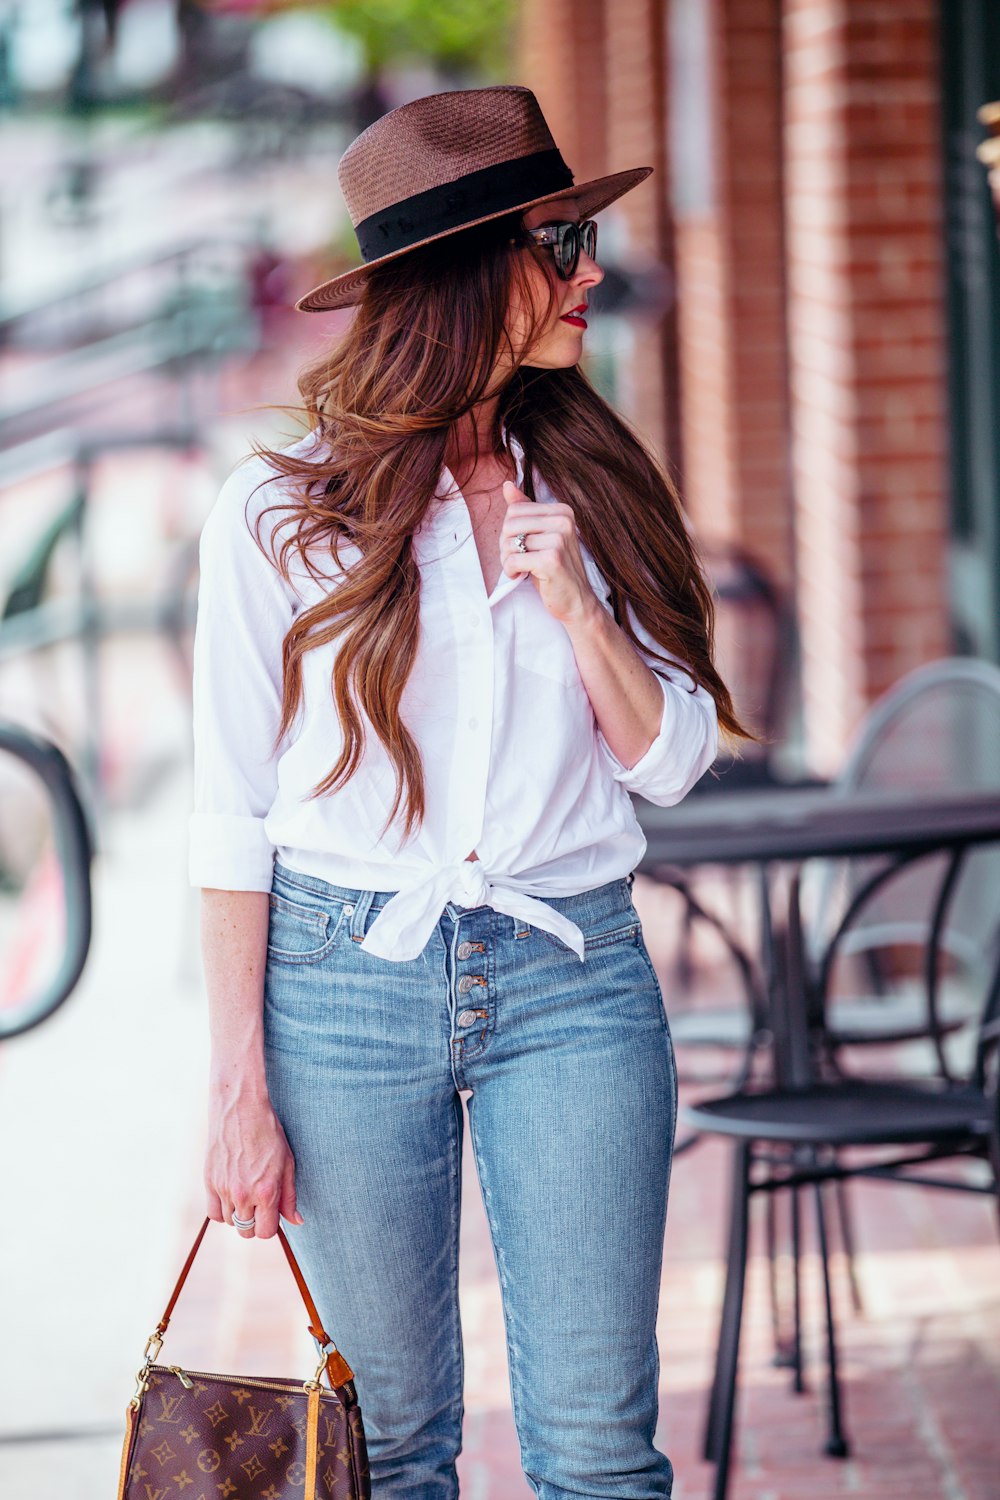 Women's white dress shirt and blue jeans photo – Free Hat Image on Unsplash